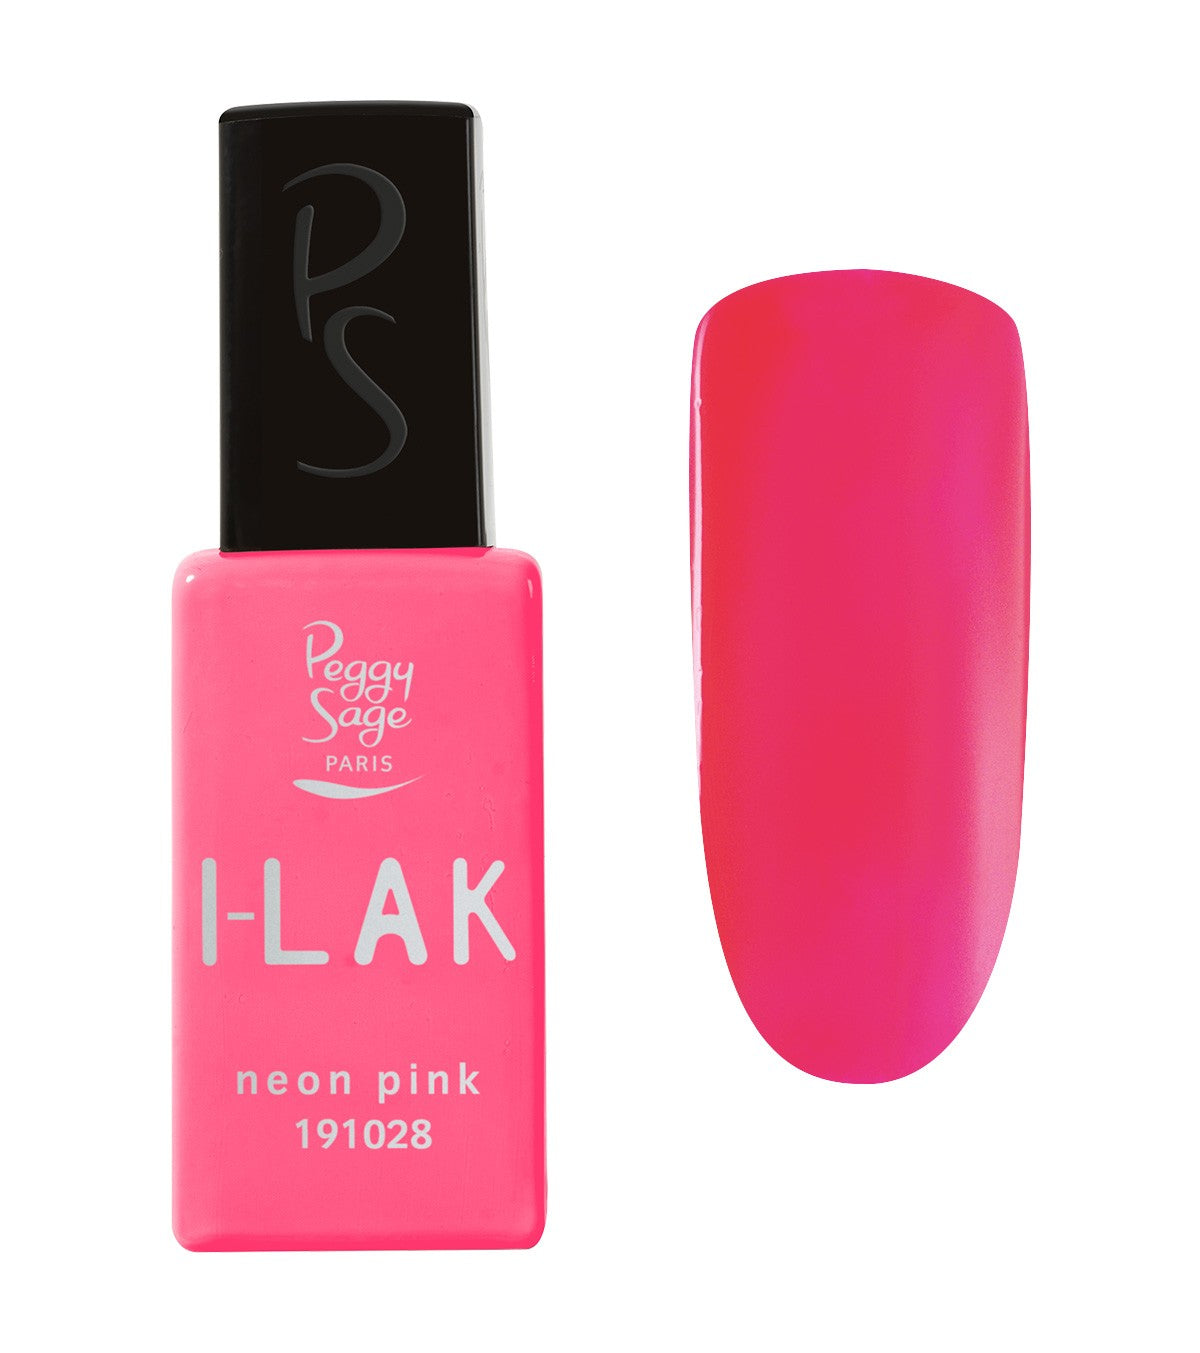 I-LAK Neon Pink Ref 191028